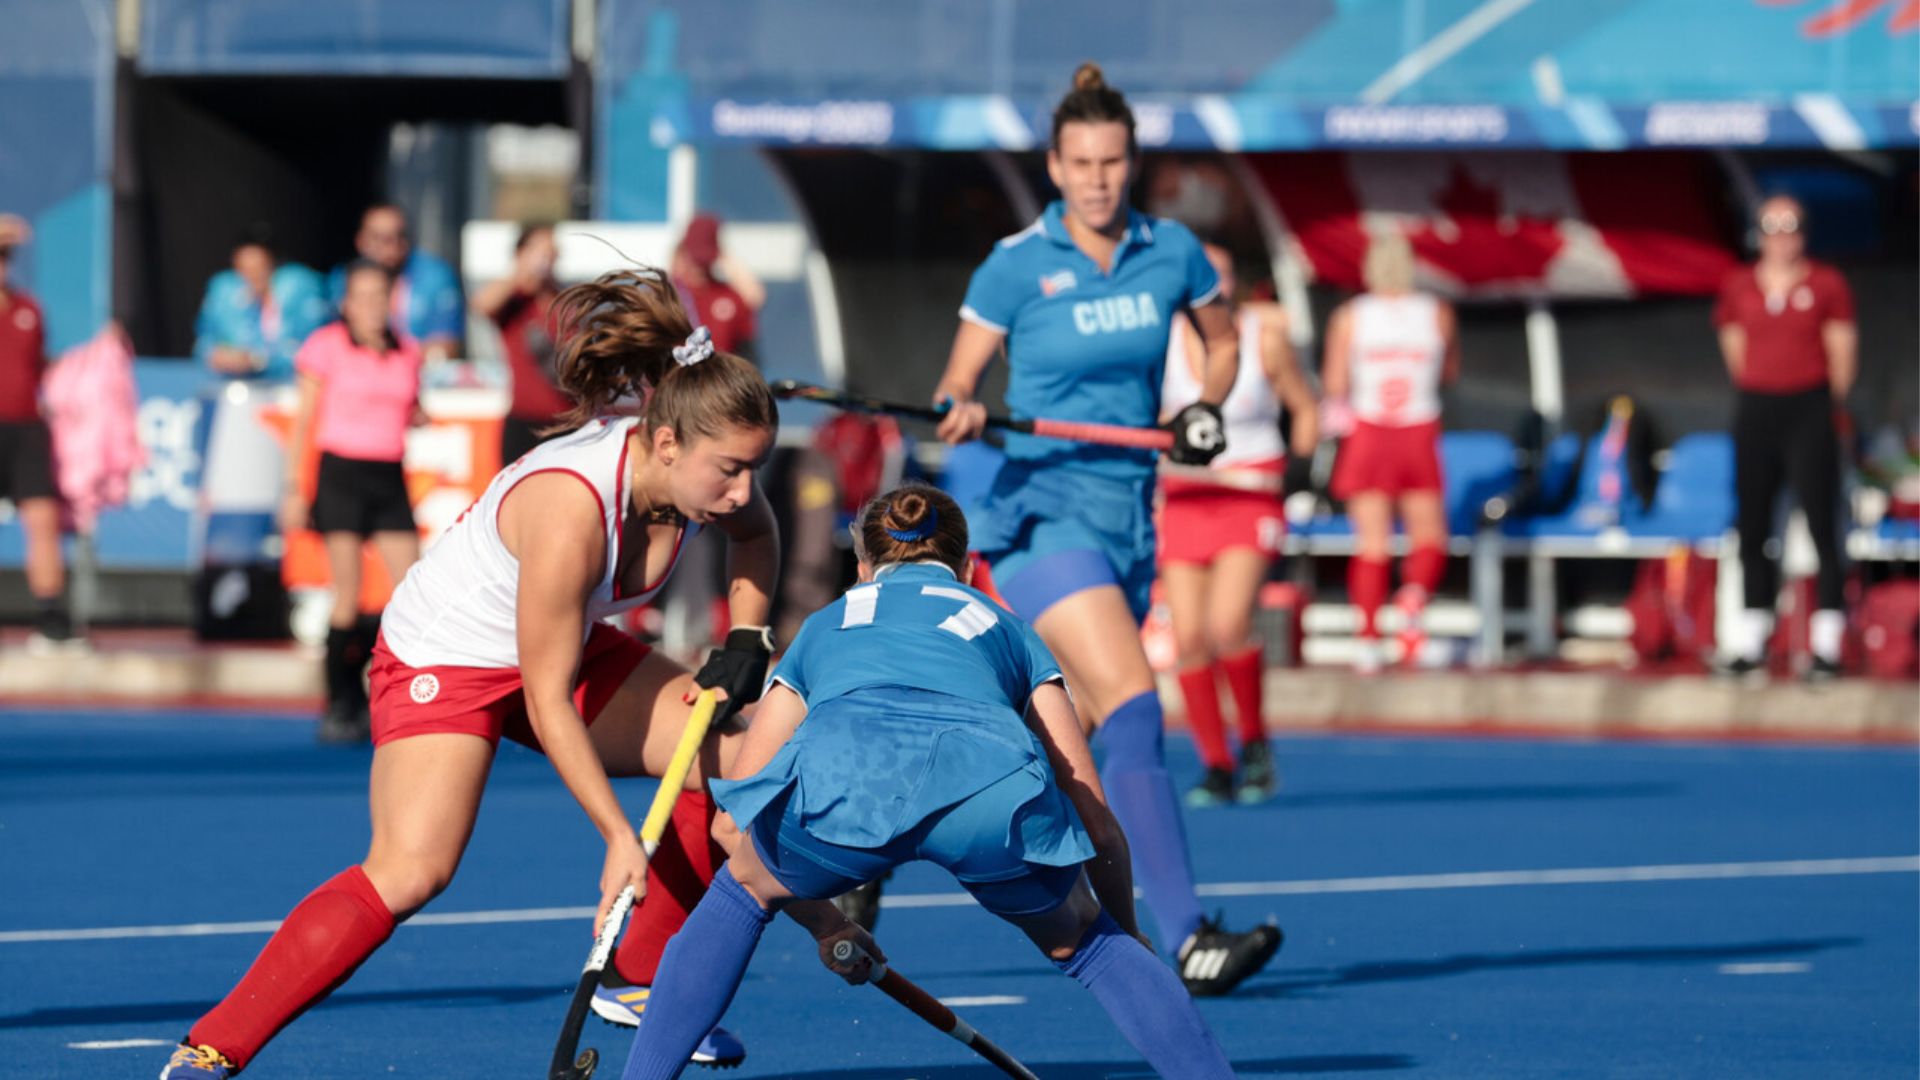 Canada defeats Cuba in female field hockey, will face Chile